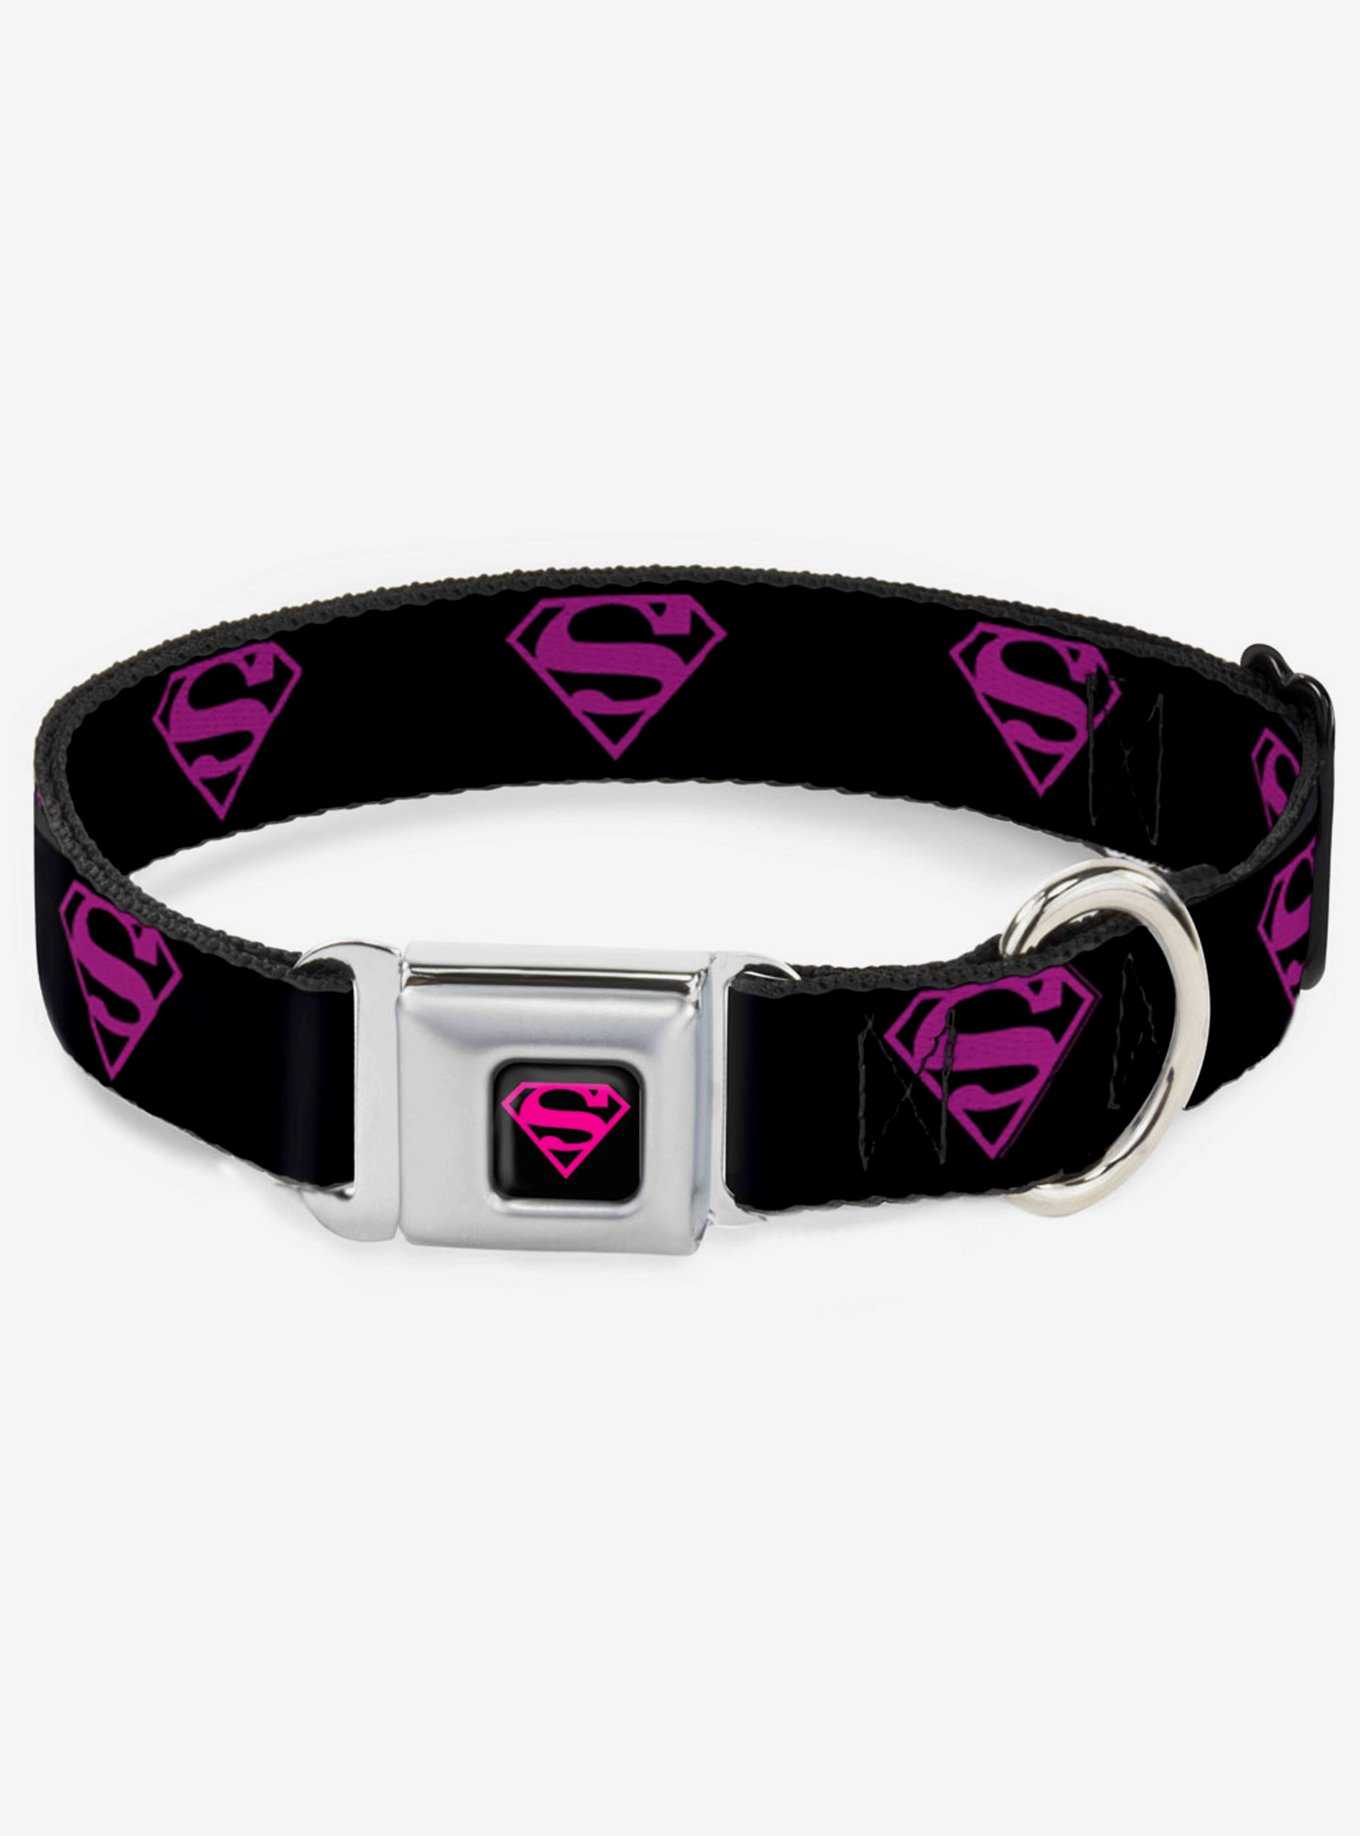 DC Comics Justice League Superman Shield Black Hot Pink Seatbelt Buckle Dog Collar, , hi-res